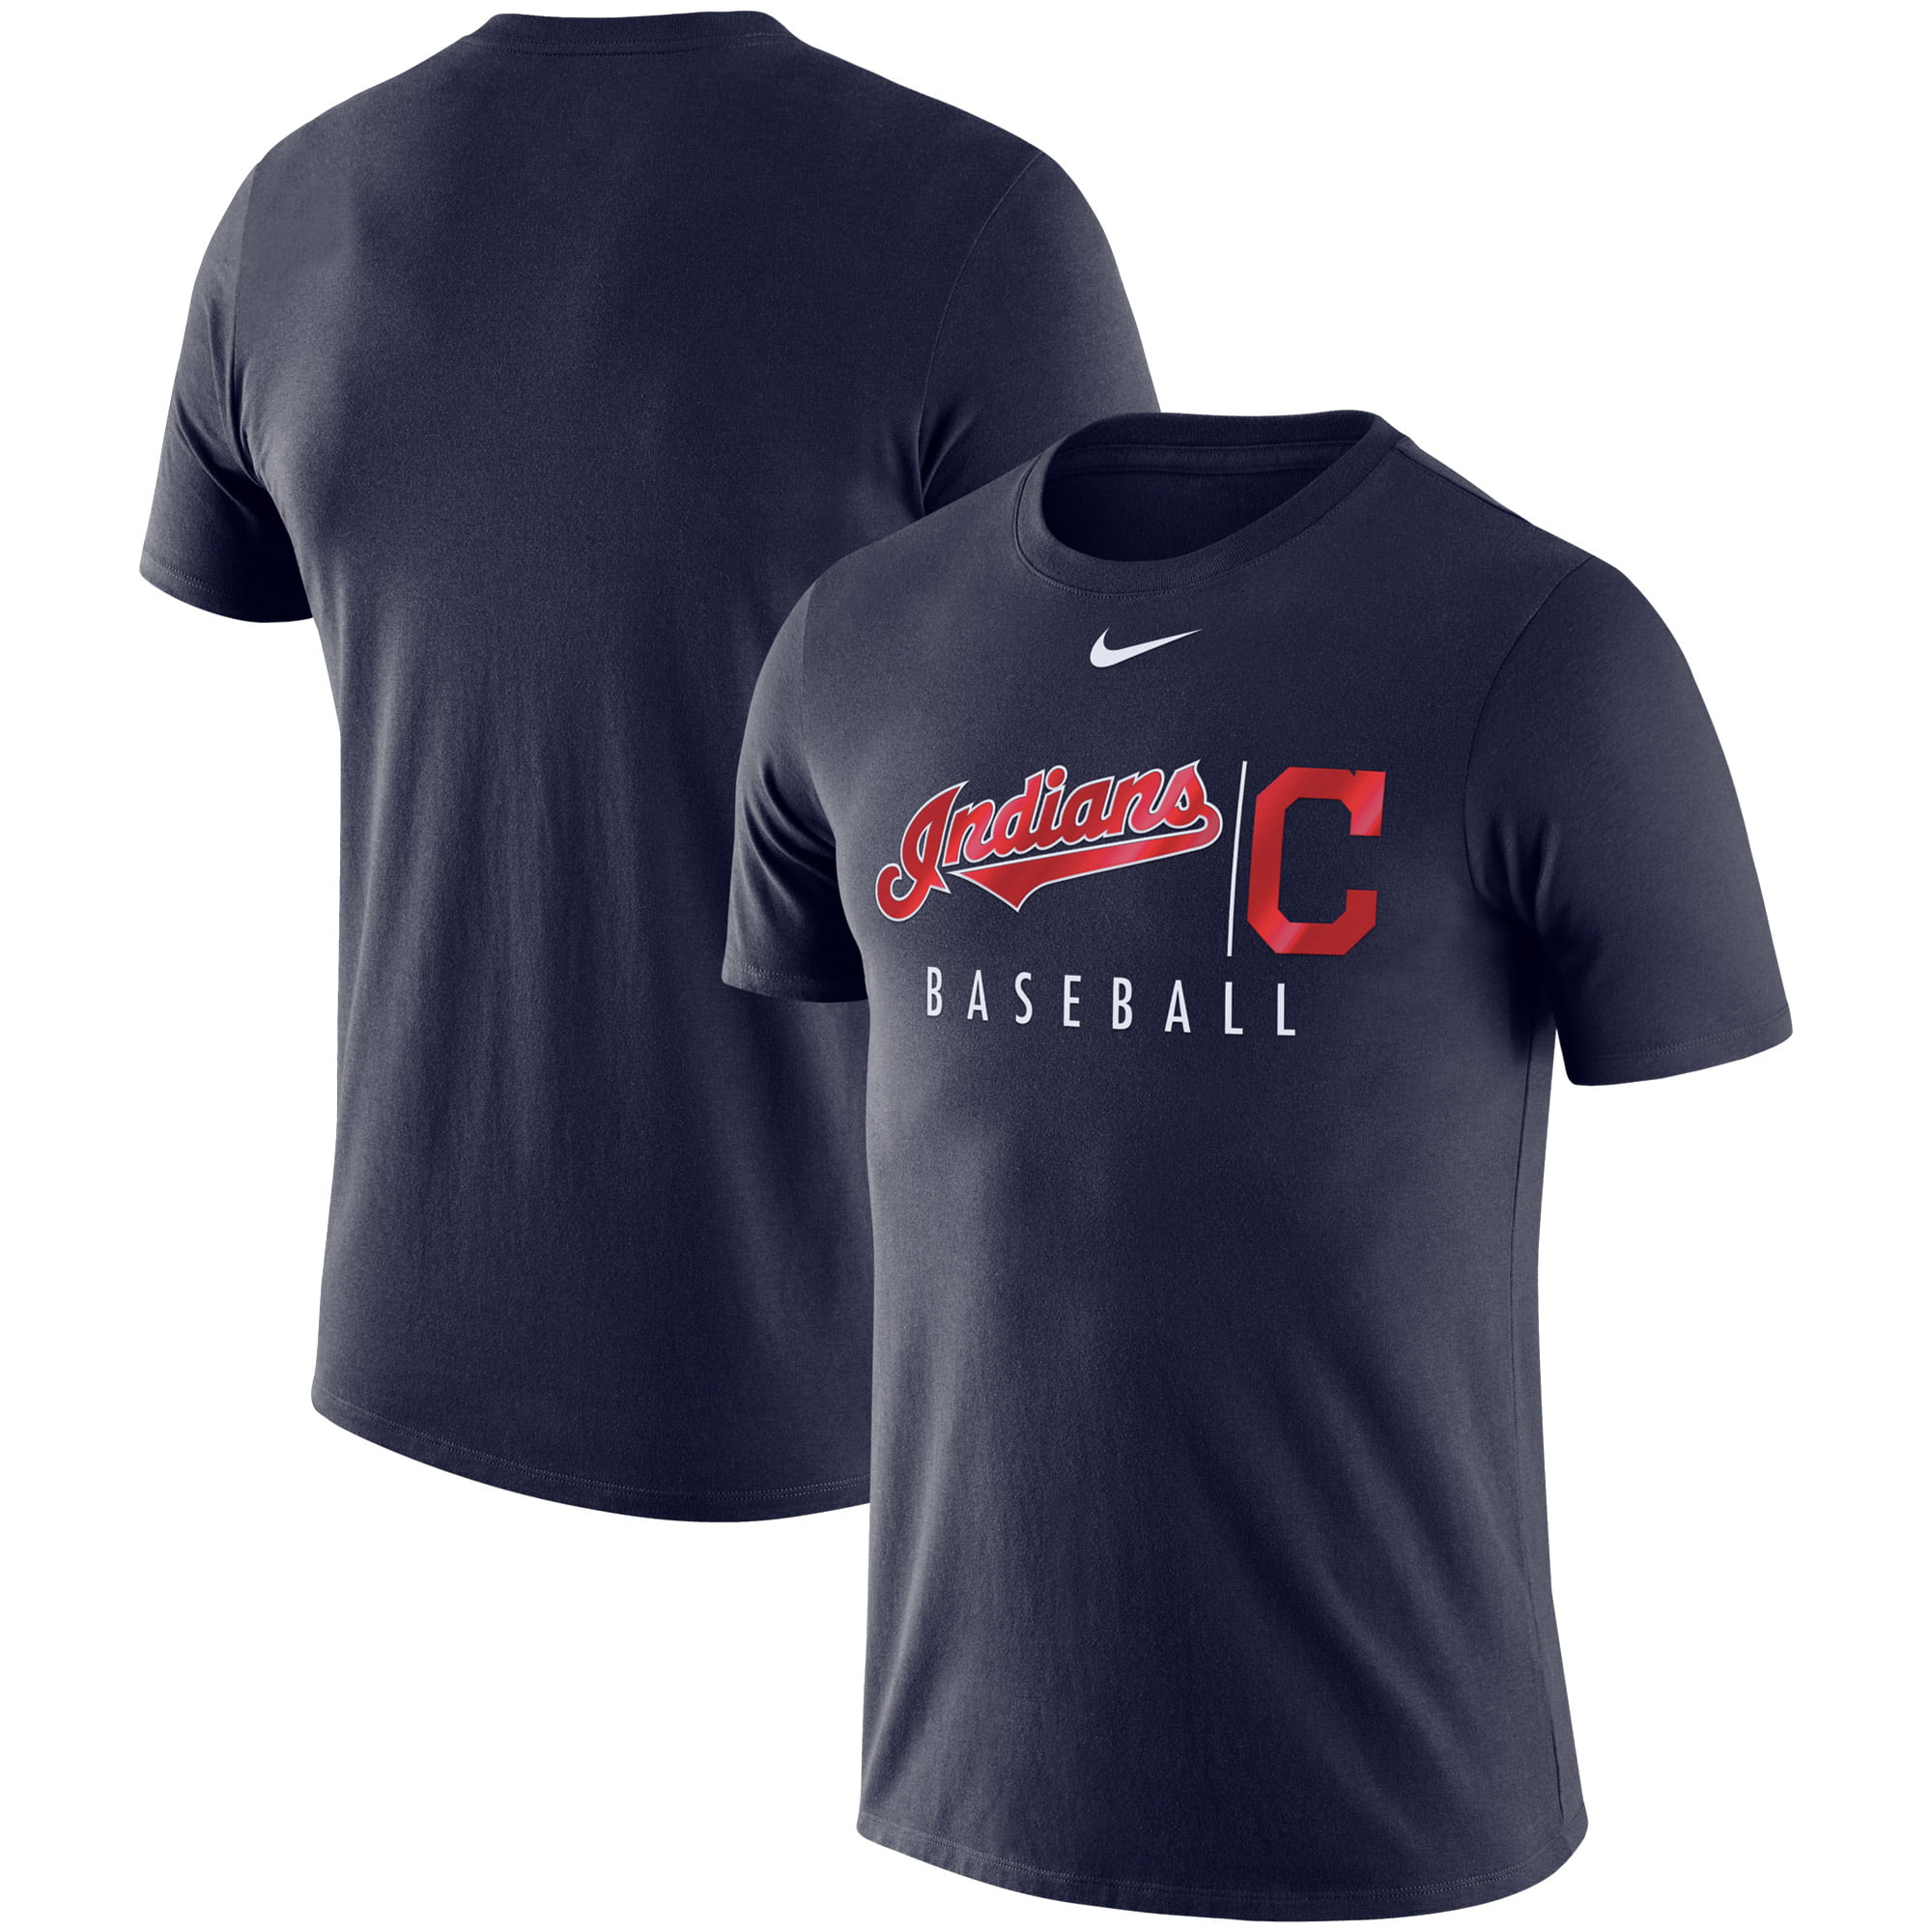 Cleveland Indians Nike MLB Practice T-Shirt - Navy - Walmart.com ...